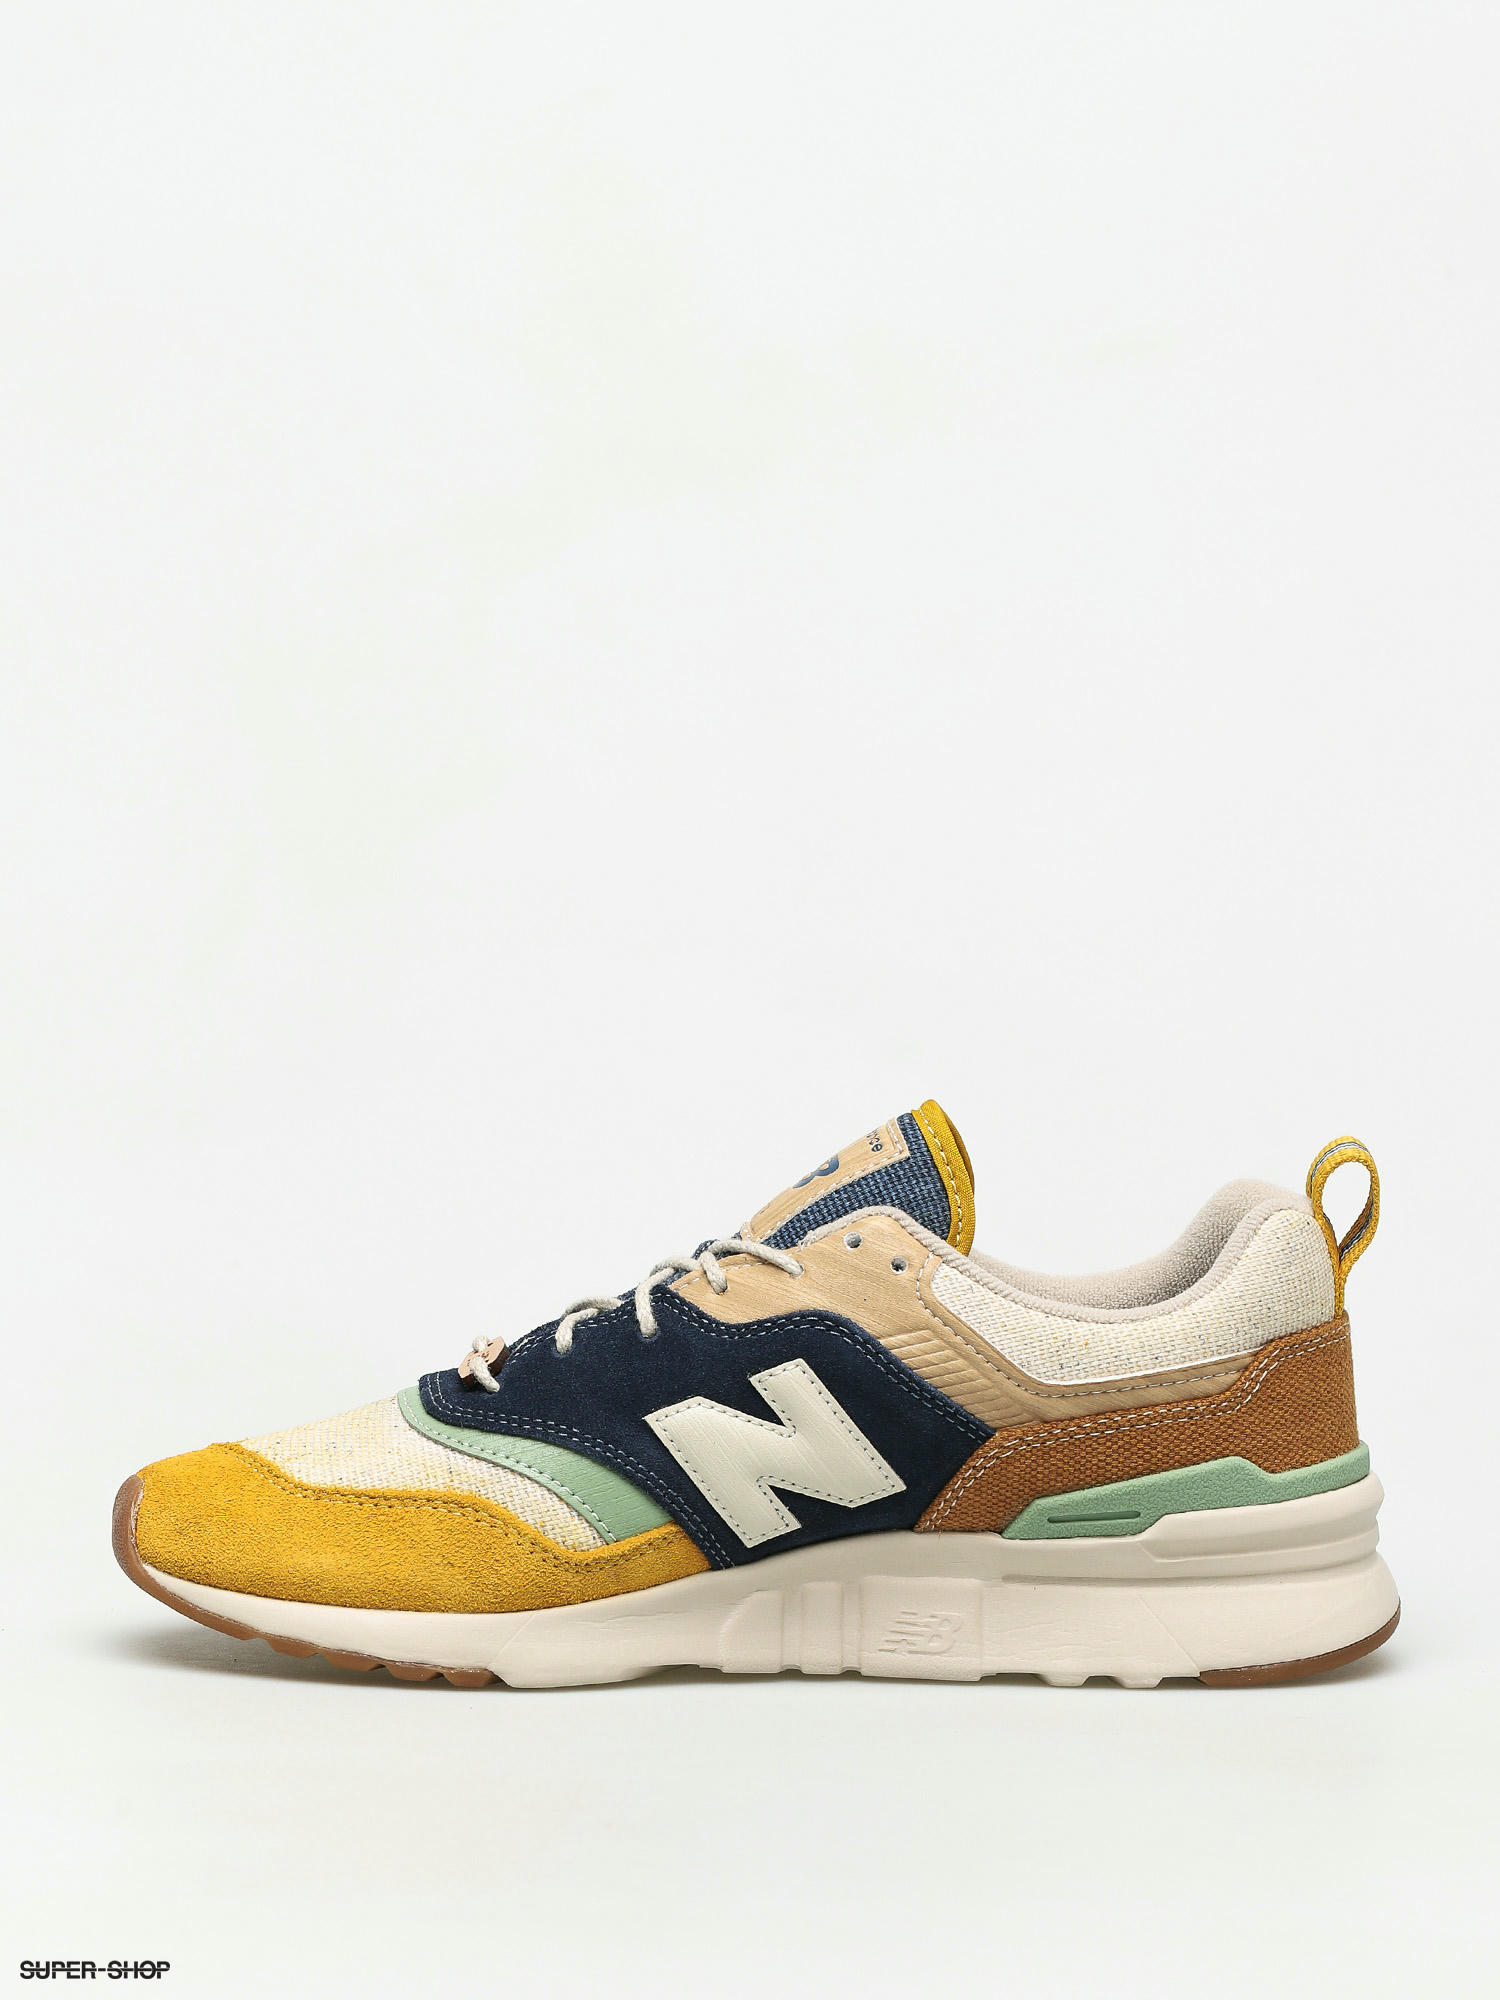 New Balance 997 Shoes (yellow)